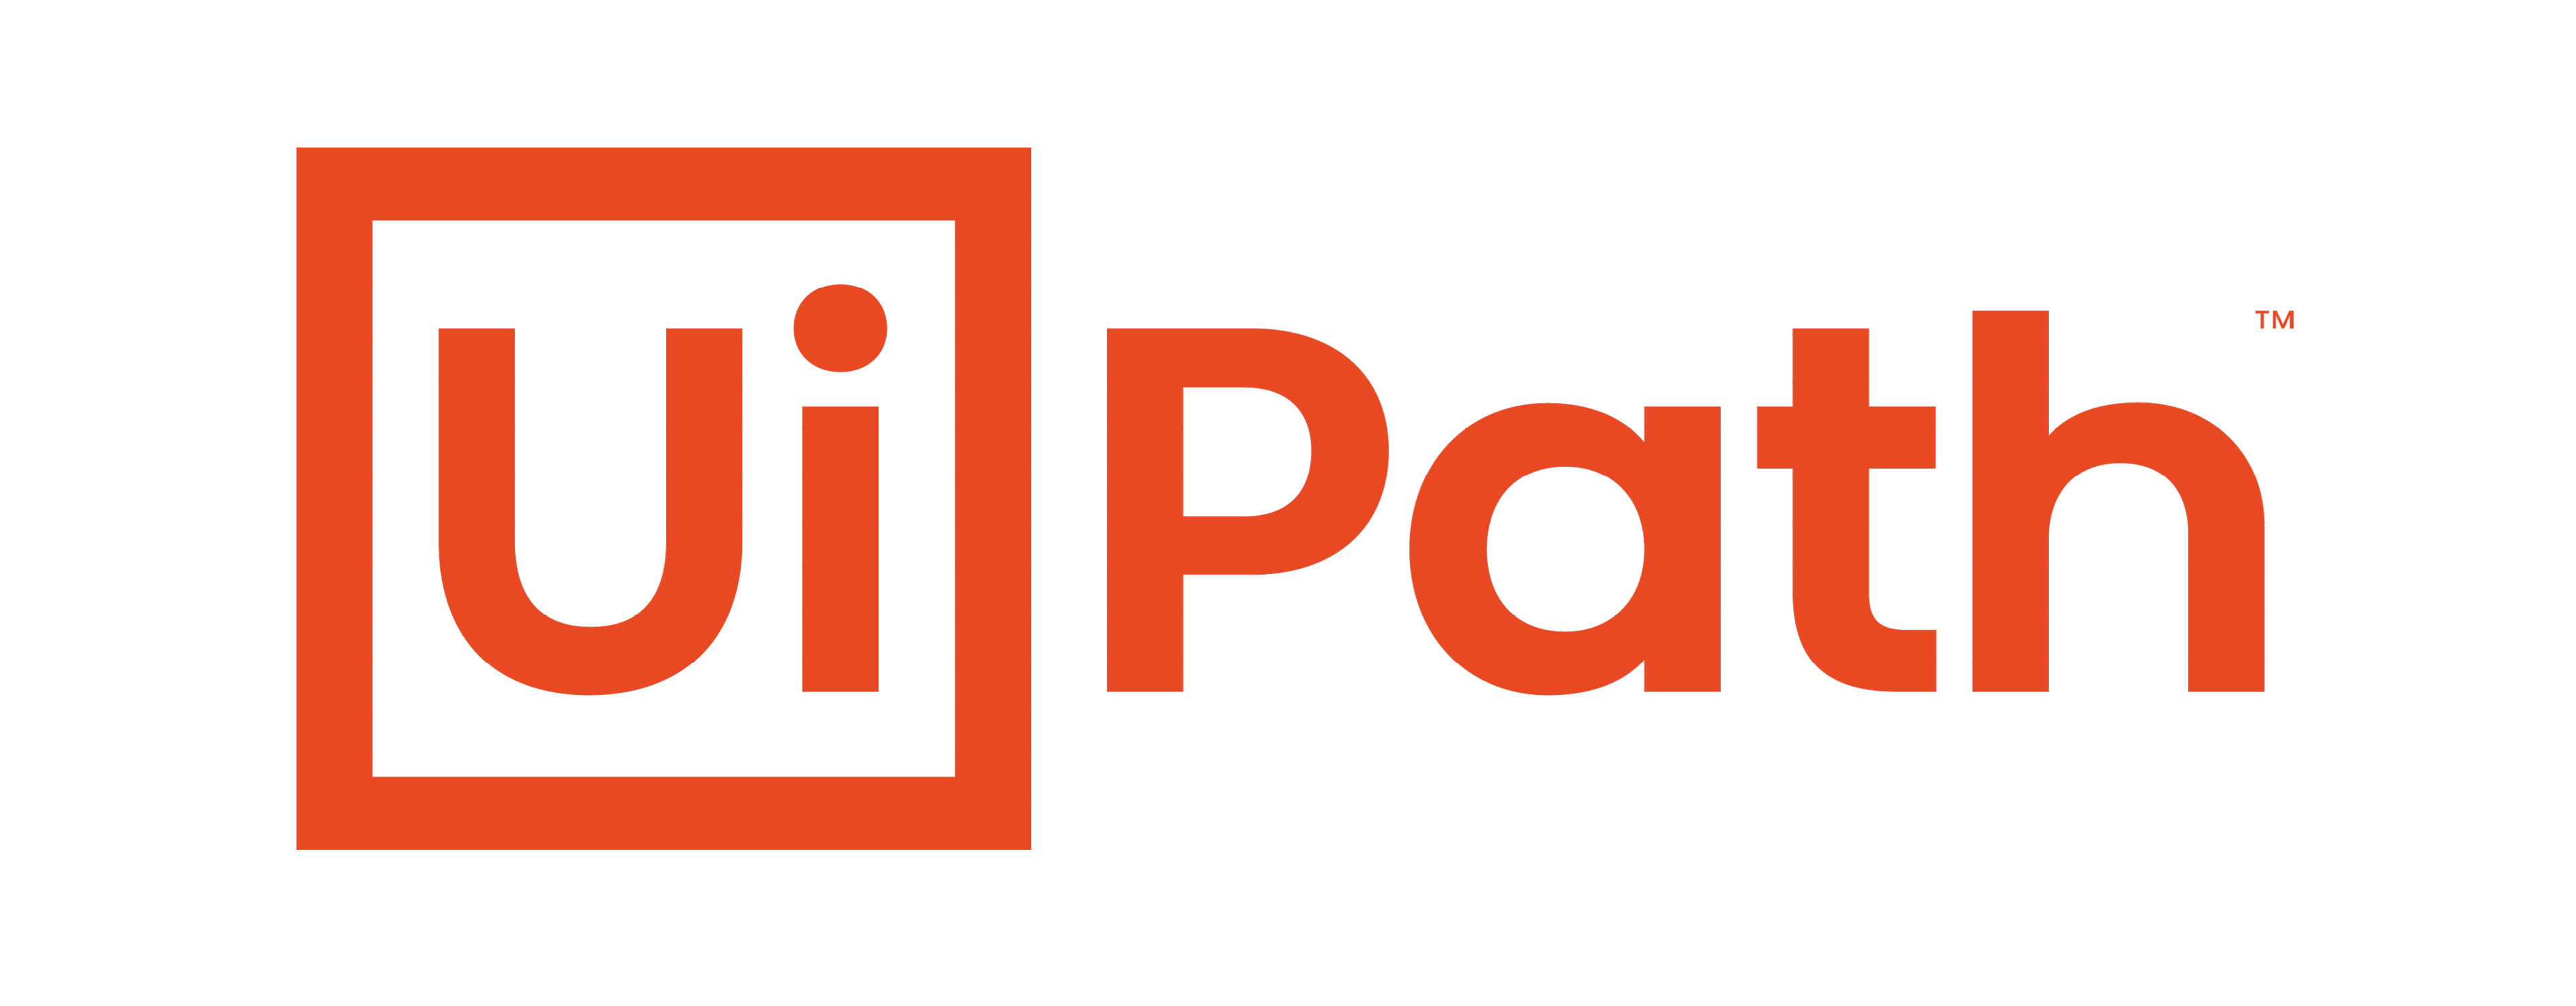 UiPath logo